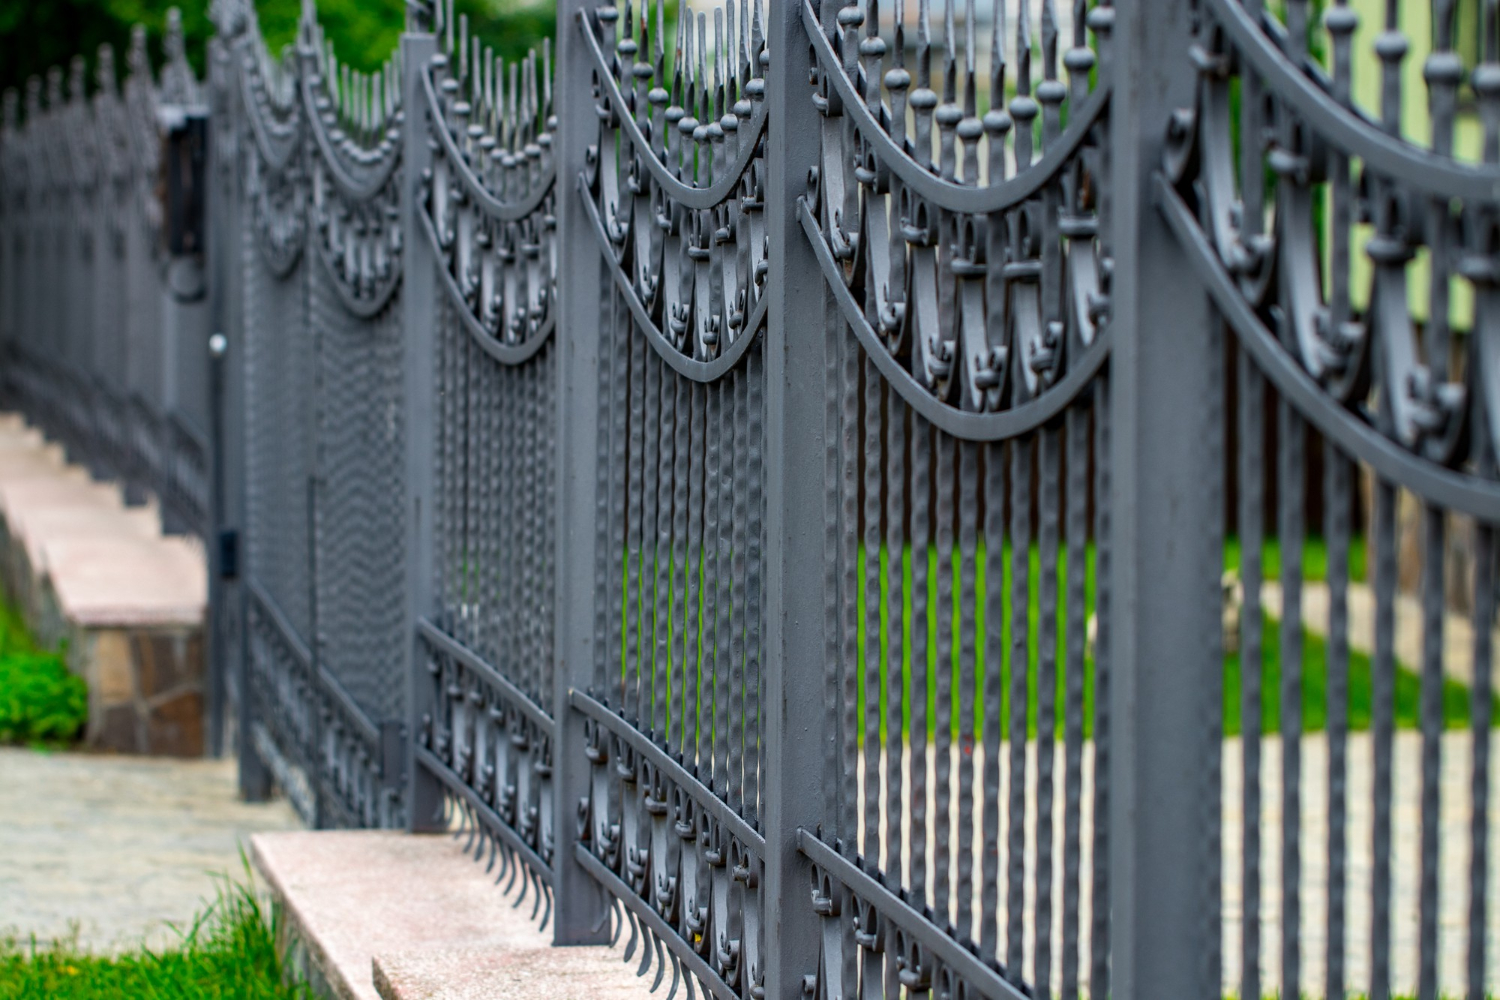 Desain pagar rumah sederhana tapi cantik dengan rangka logam besi akan memberi kesan klasik dan minimalis.